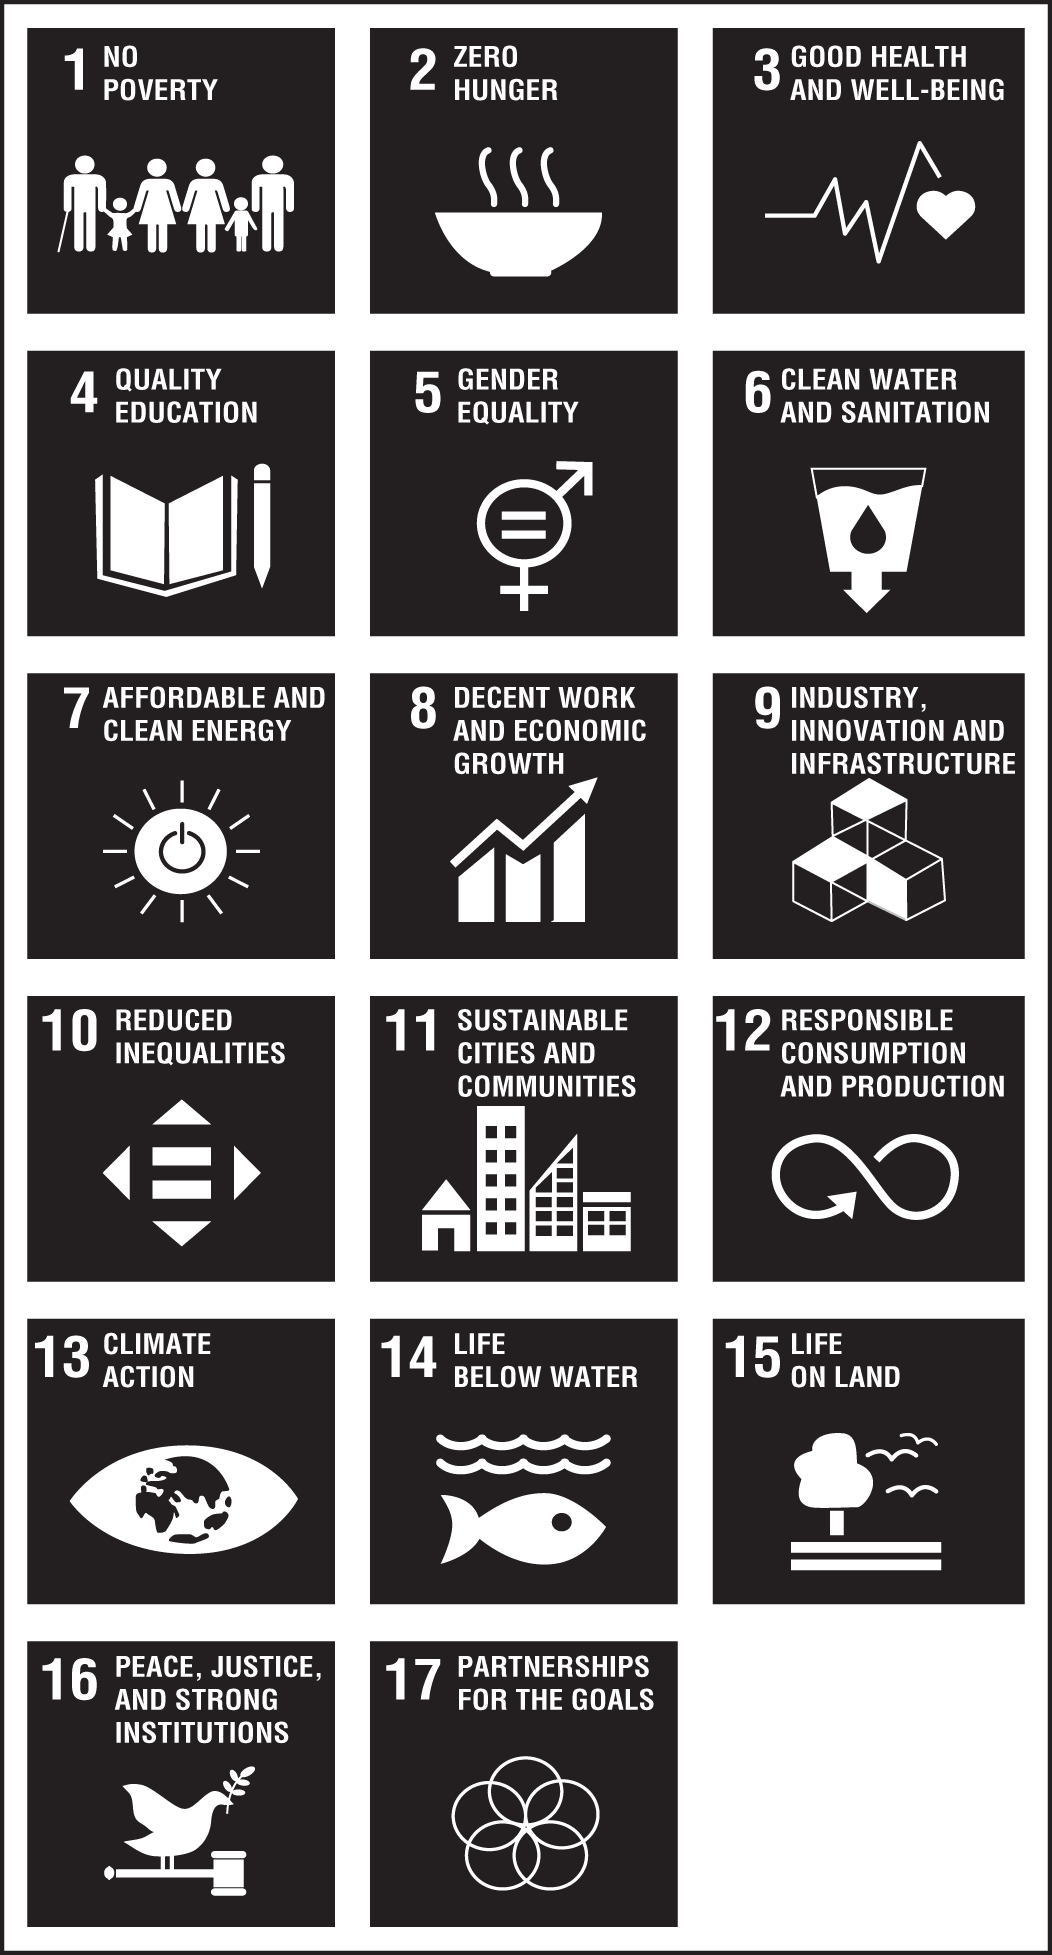 Snapshot of the Sustainable Development Goals.